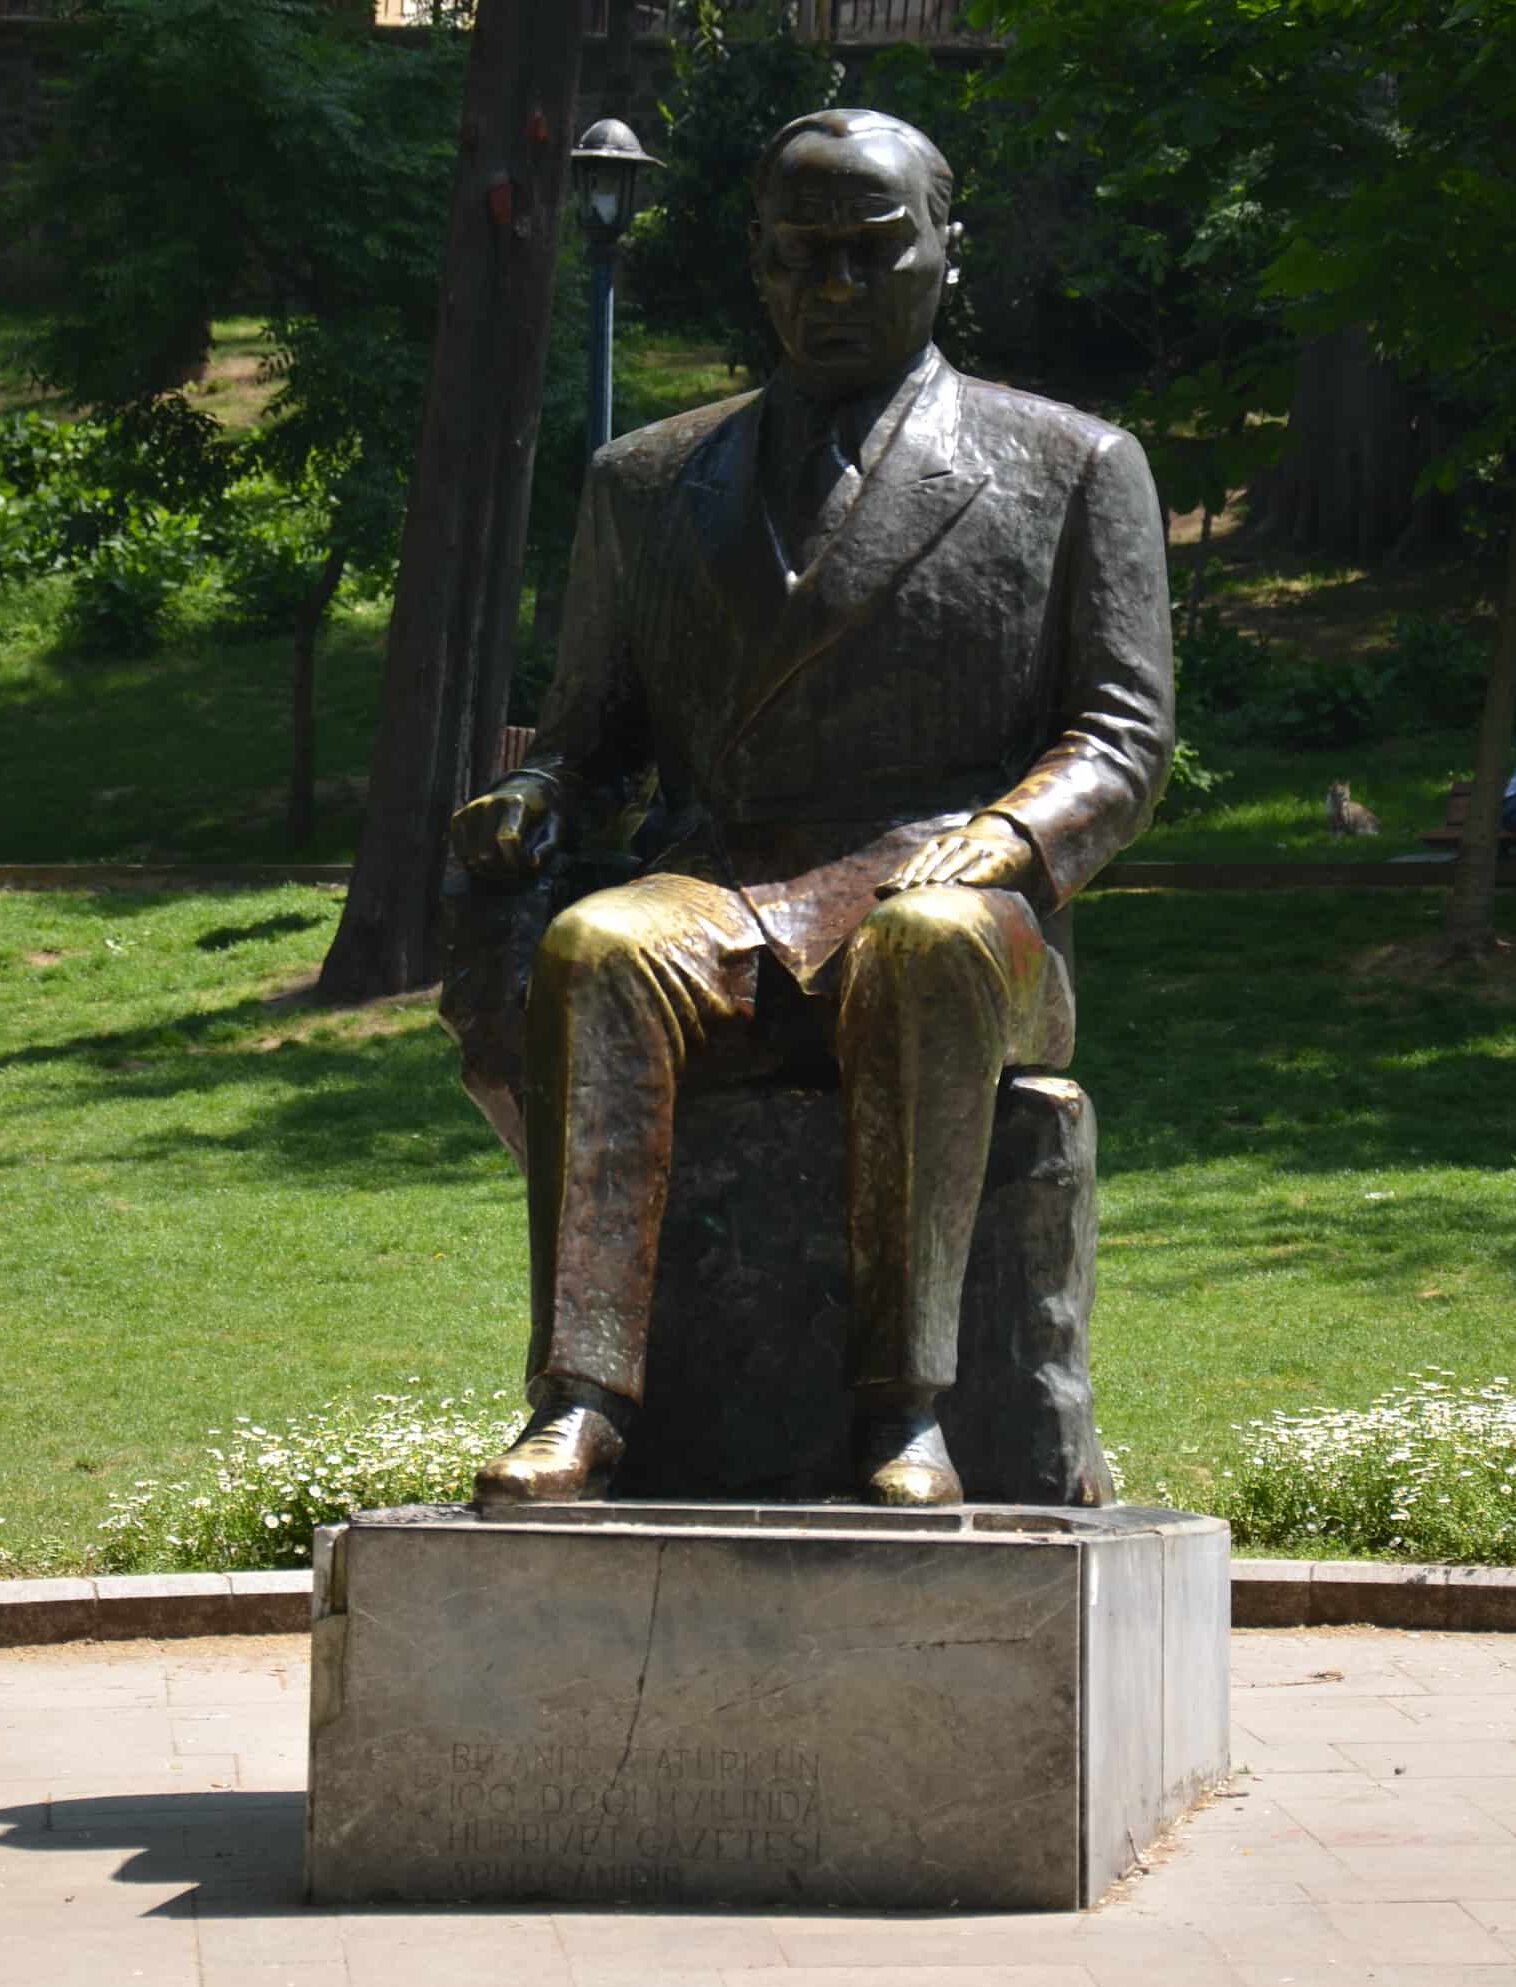 Atatürk sculpture at Gülhane Park in Istanbul, Turkey